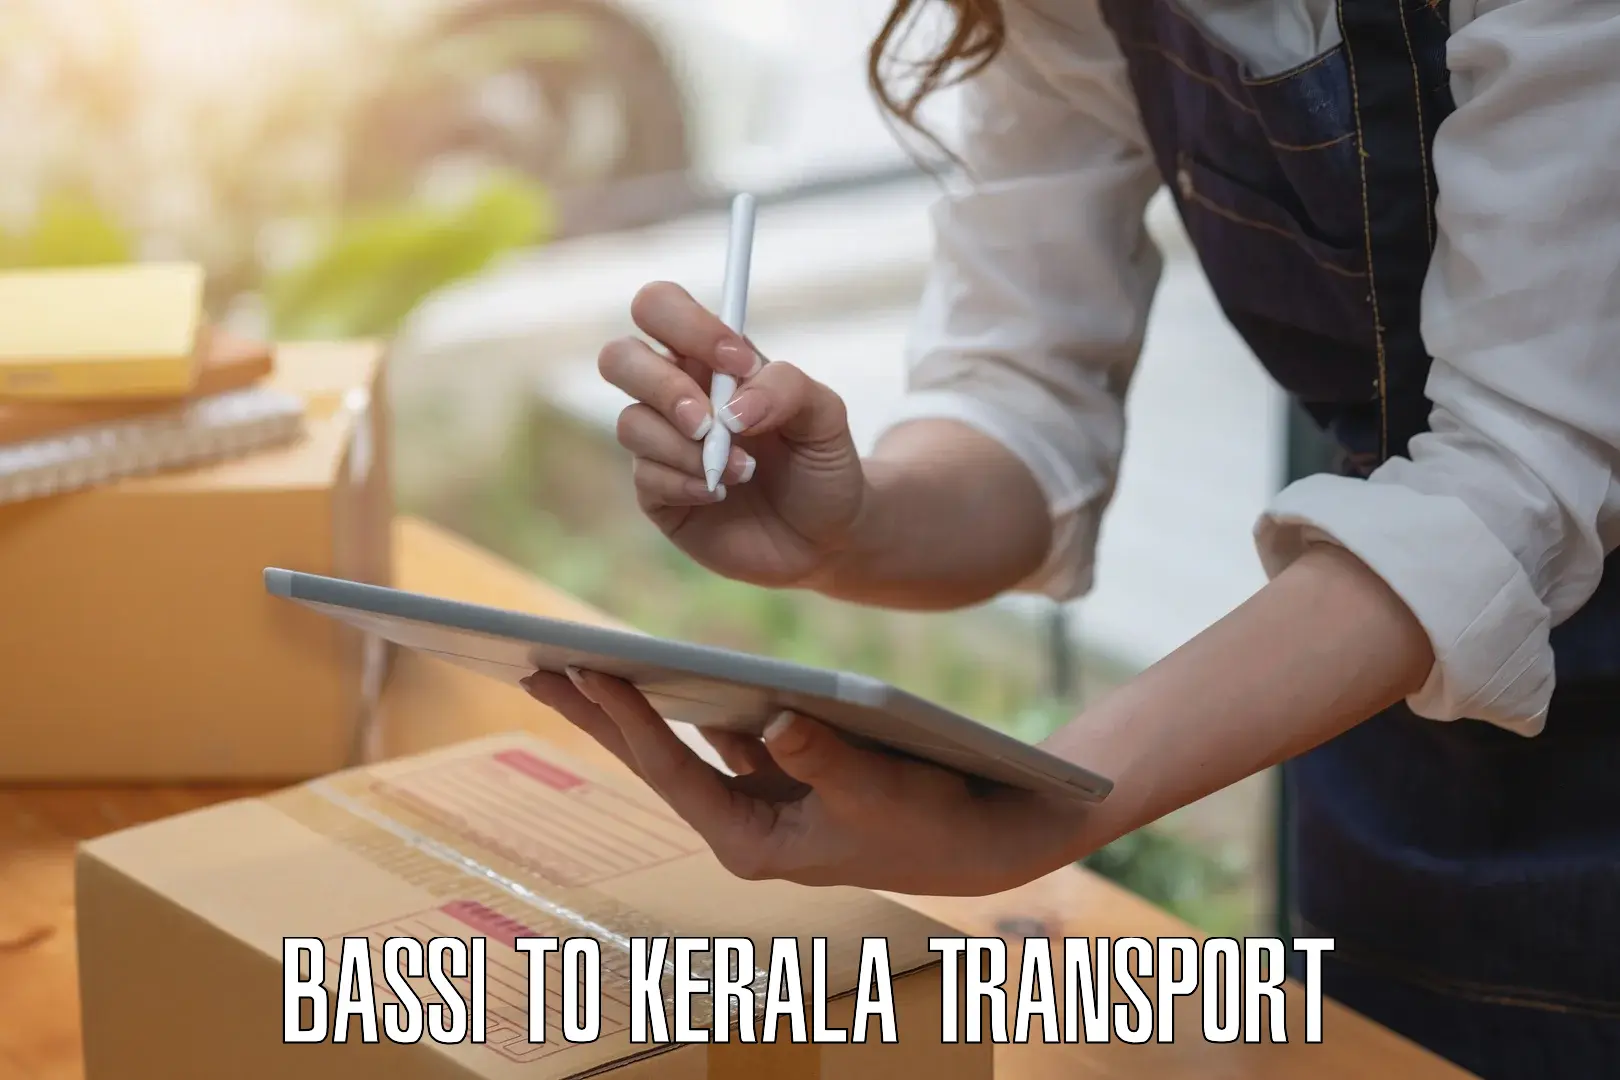 Shipping partner Bassi to Kerala